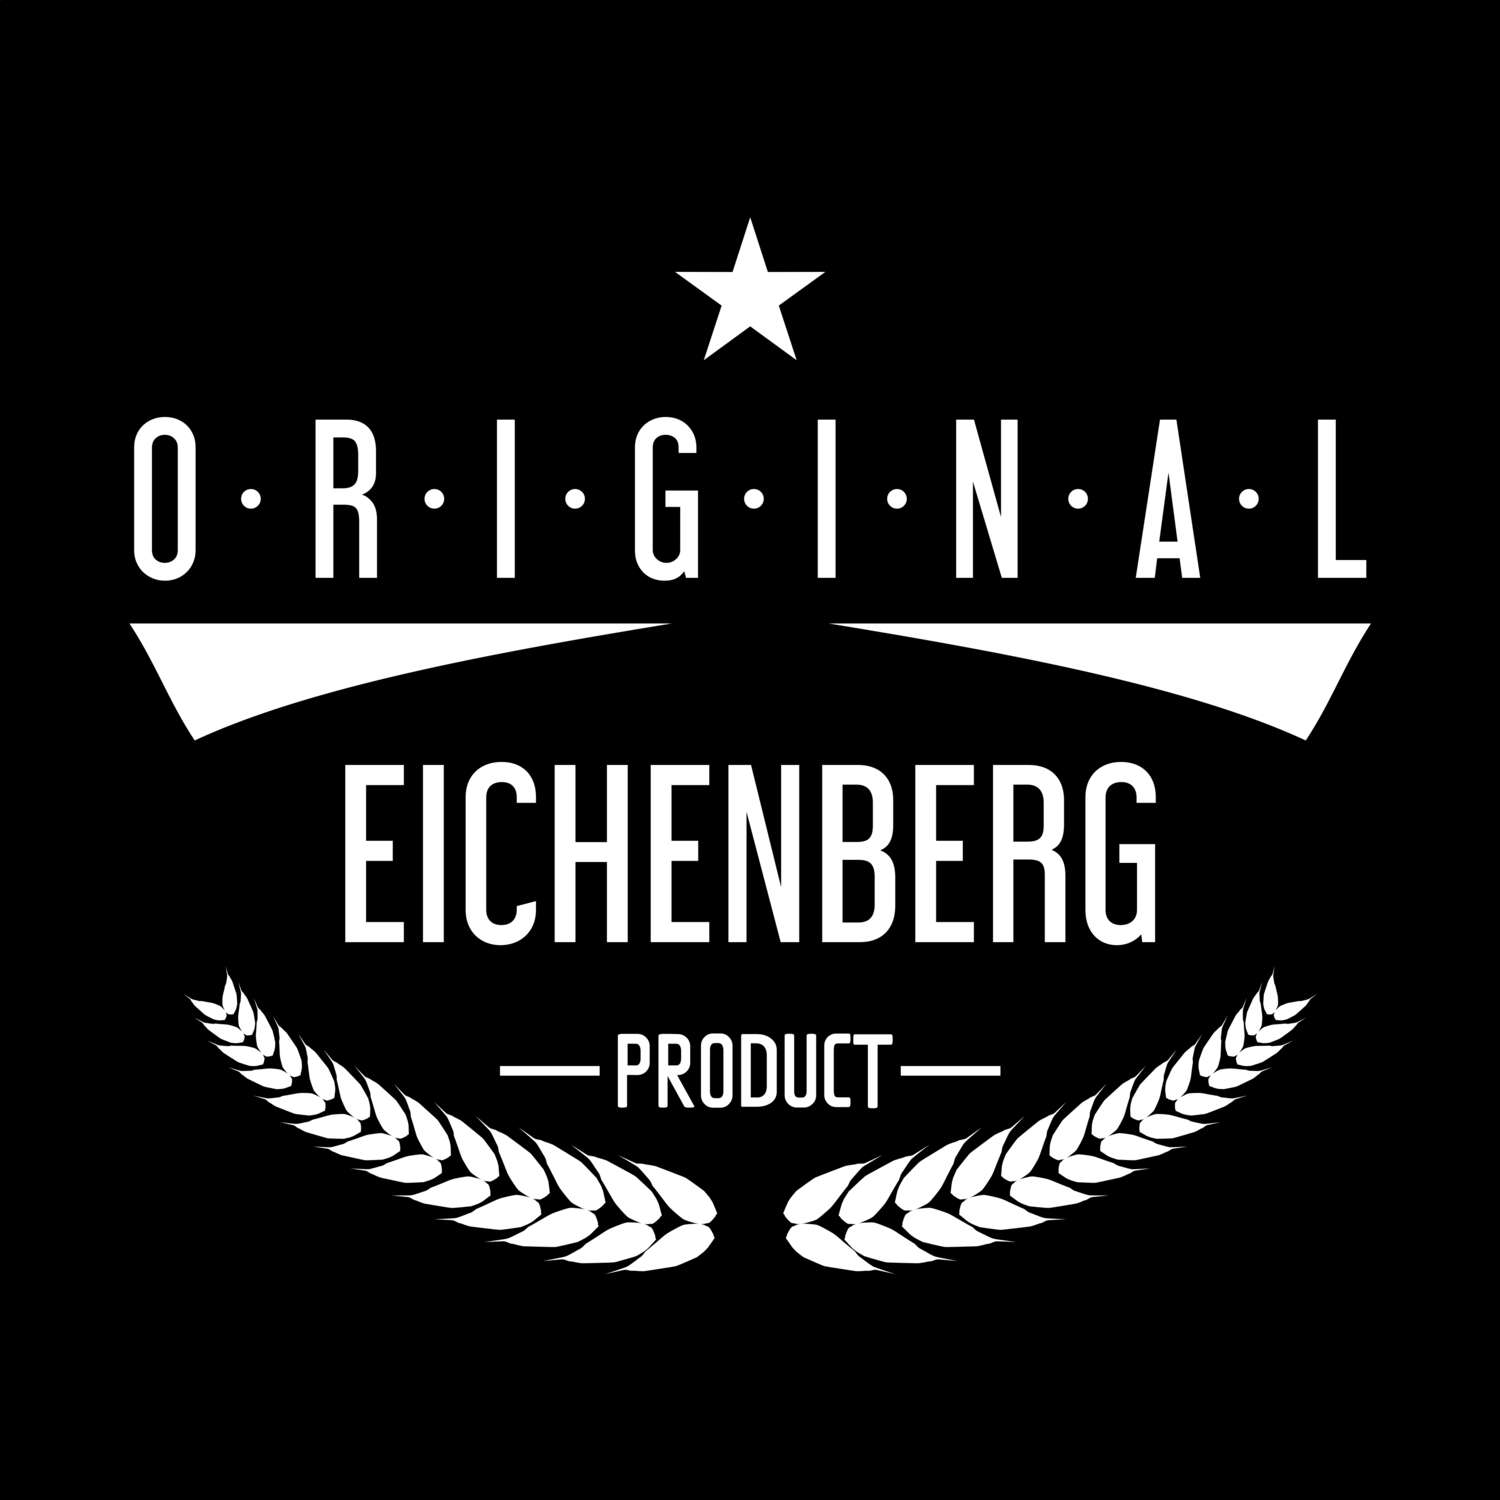 Eichenberg T-Shirt »Original Product«